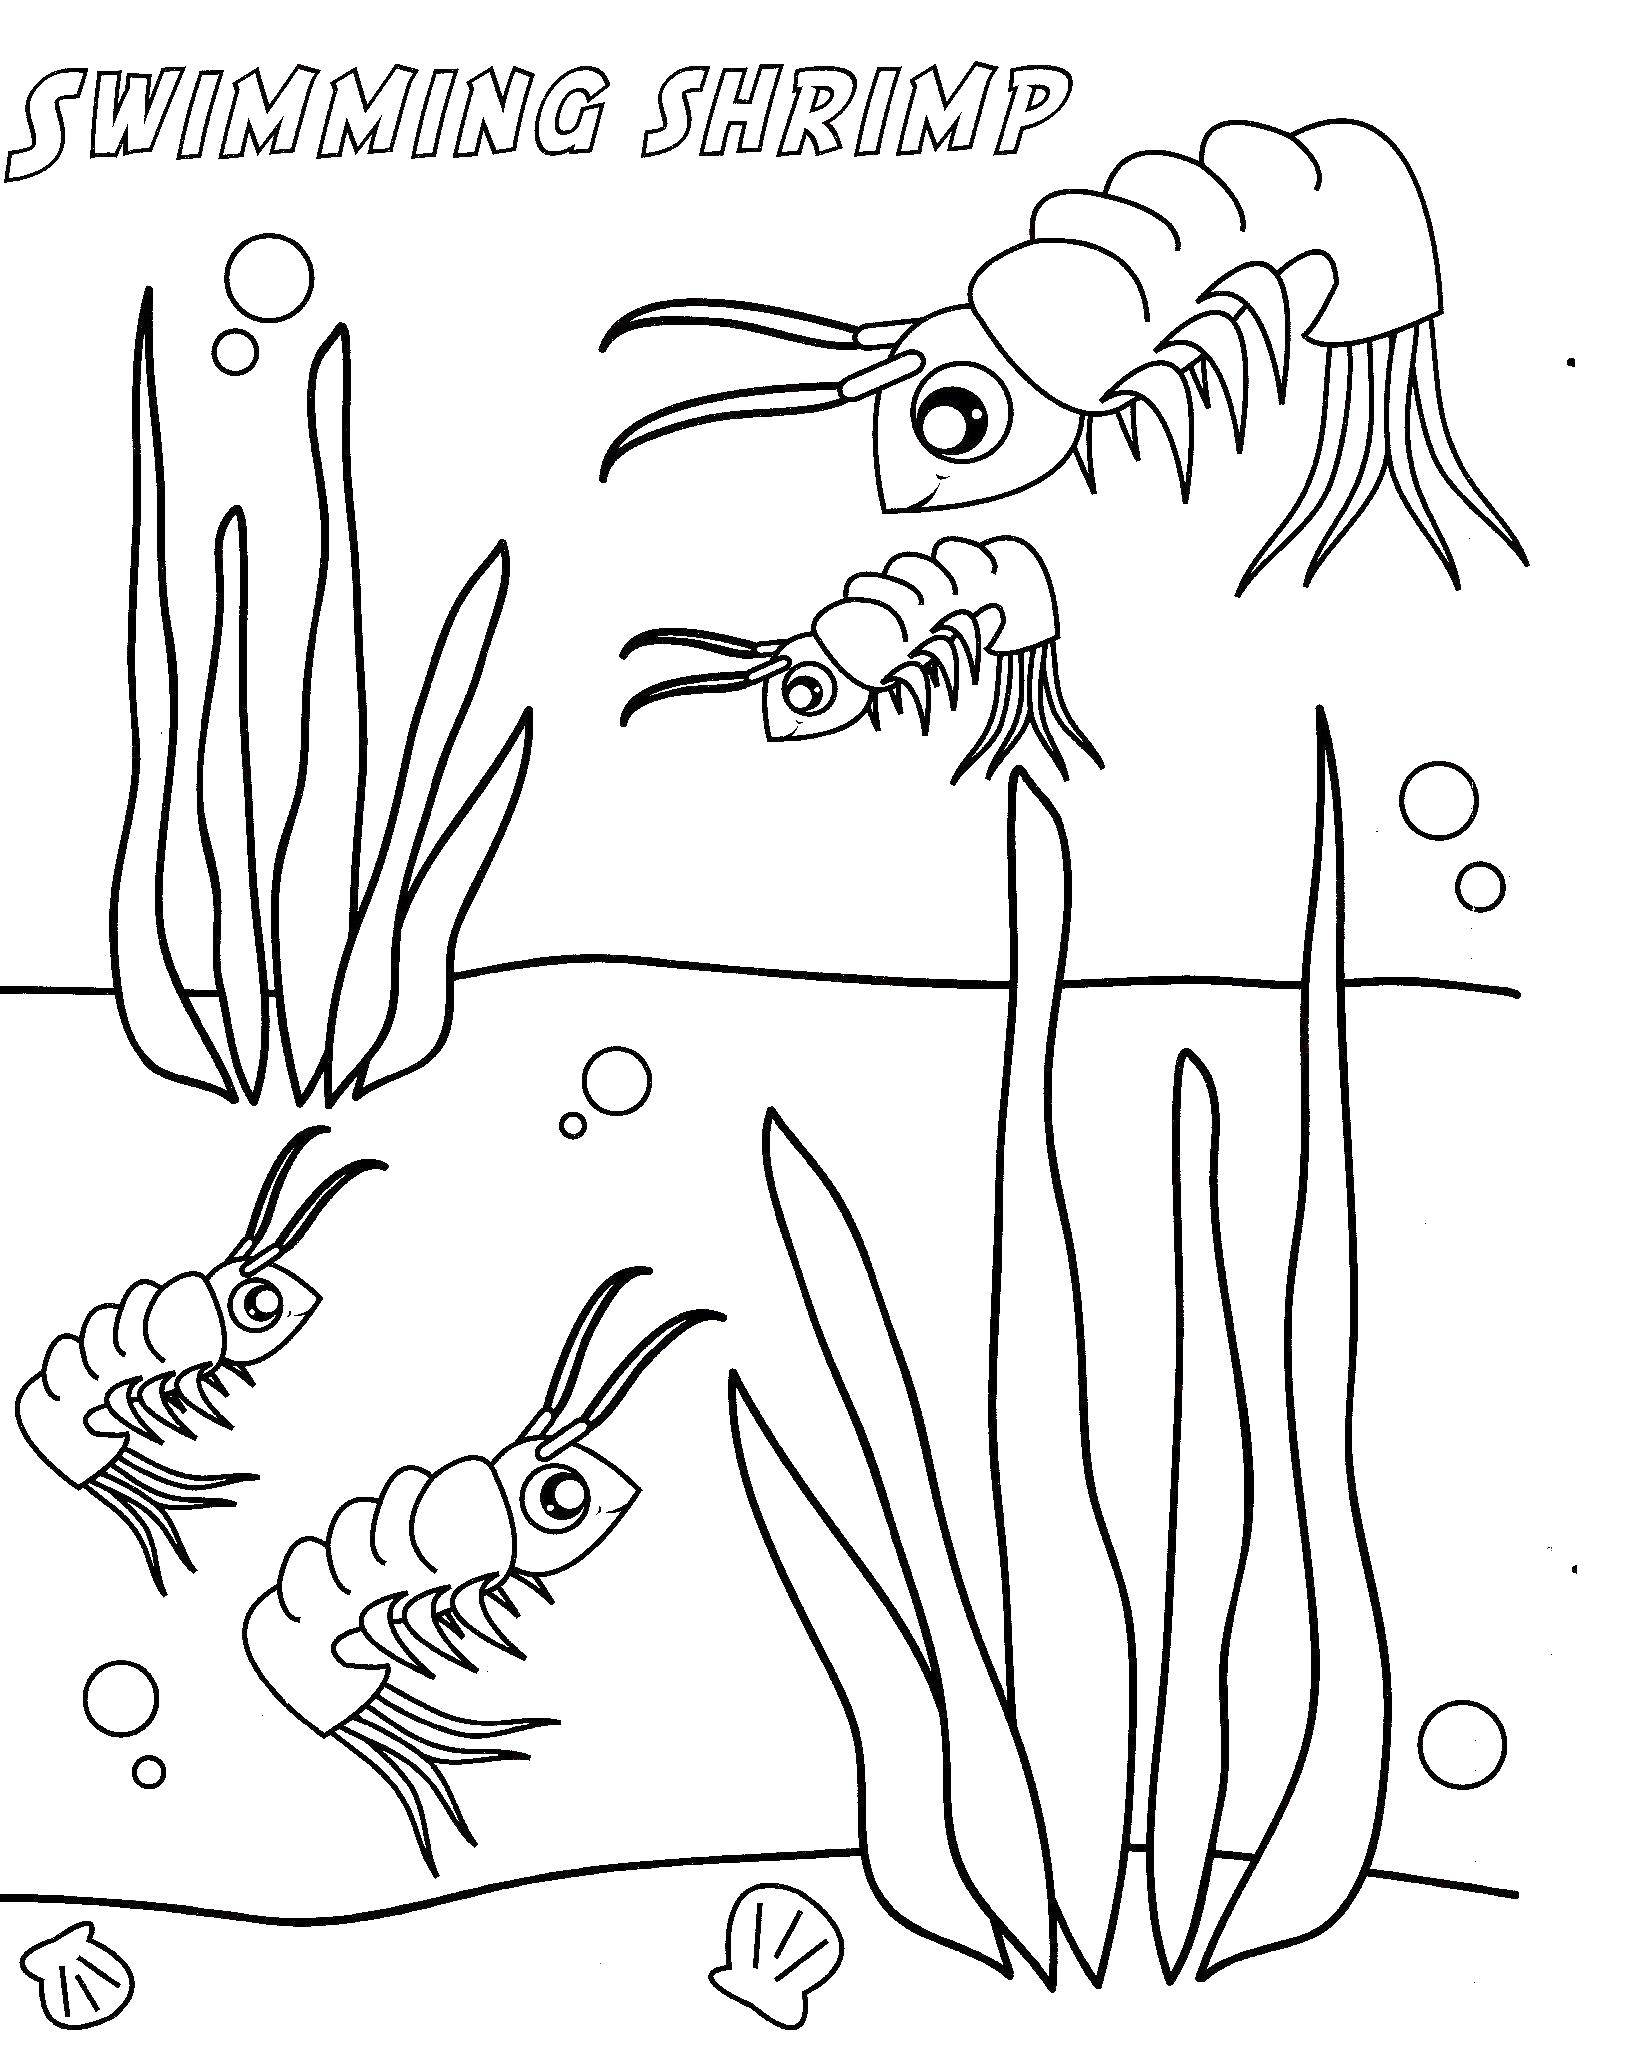 Coloring Shrimp. Category Marine animals. Tags:  Underwater world, shrimp.